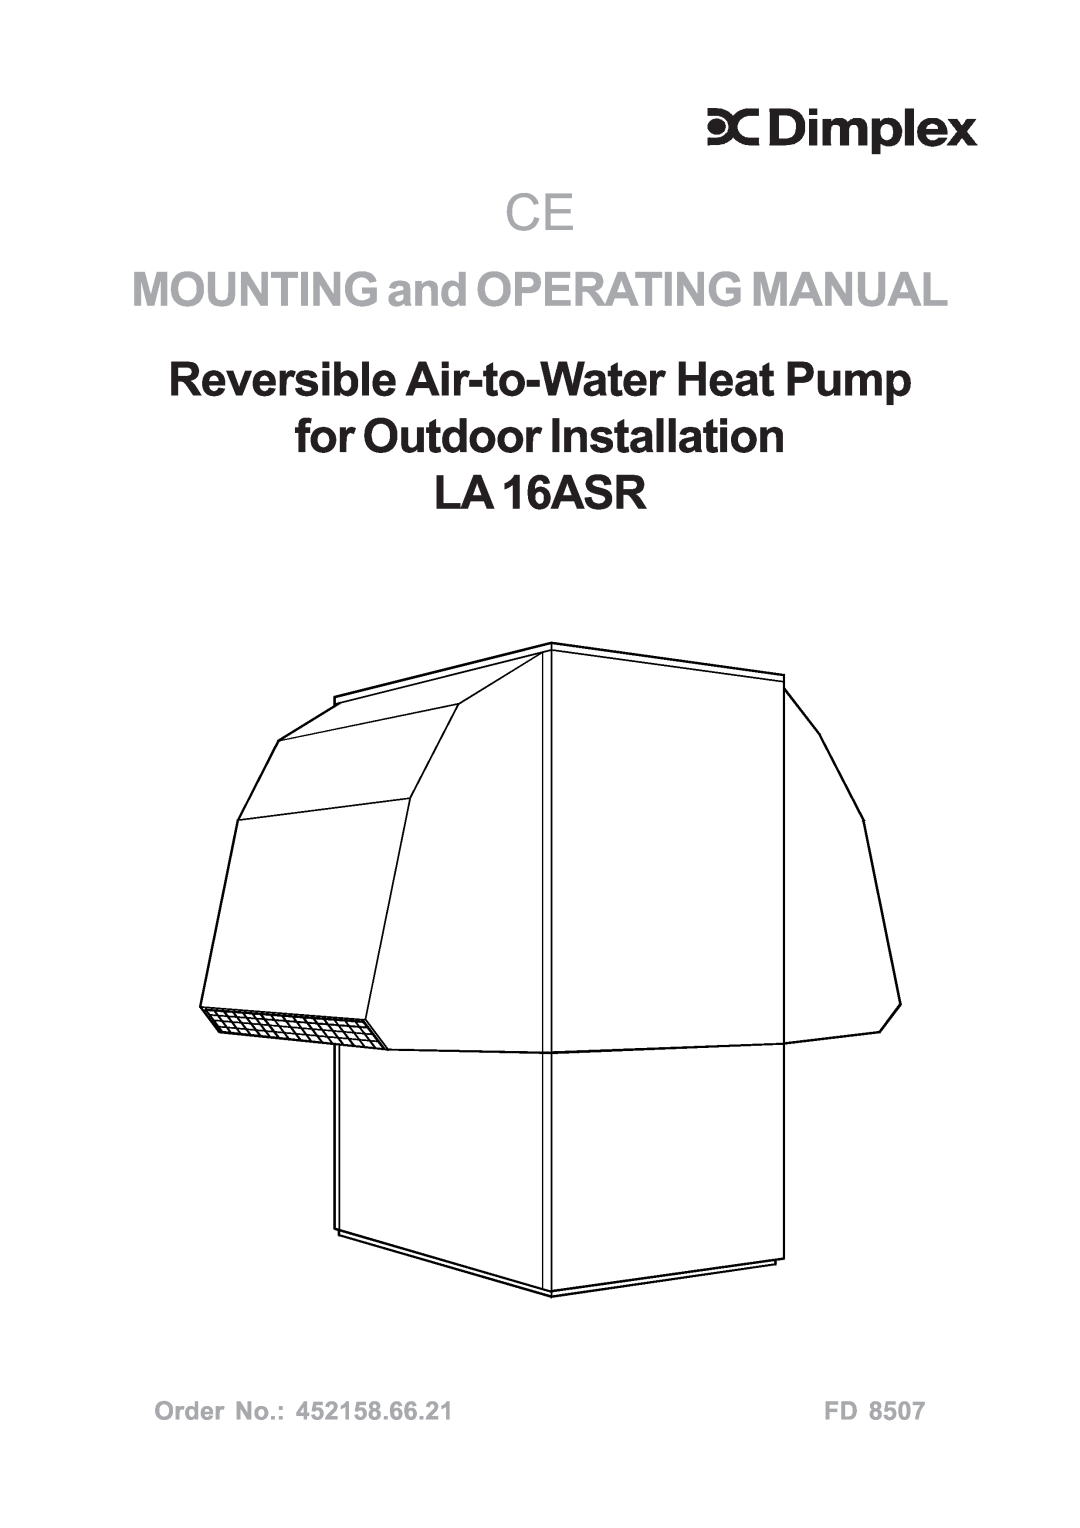 Dimplex LA16ASR manual MOUNTING and OPERATING MANUAL, Reversible Air-to-WaterHeat Pump, for Outdoor Installation LA 16ASR 